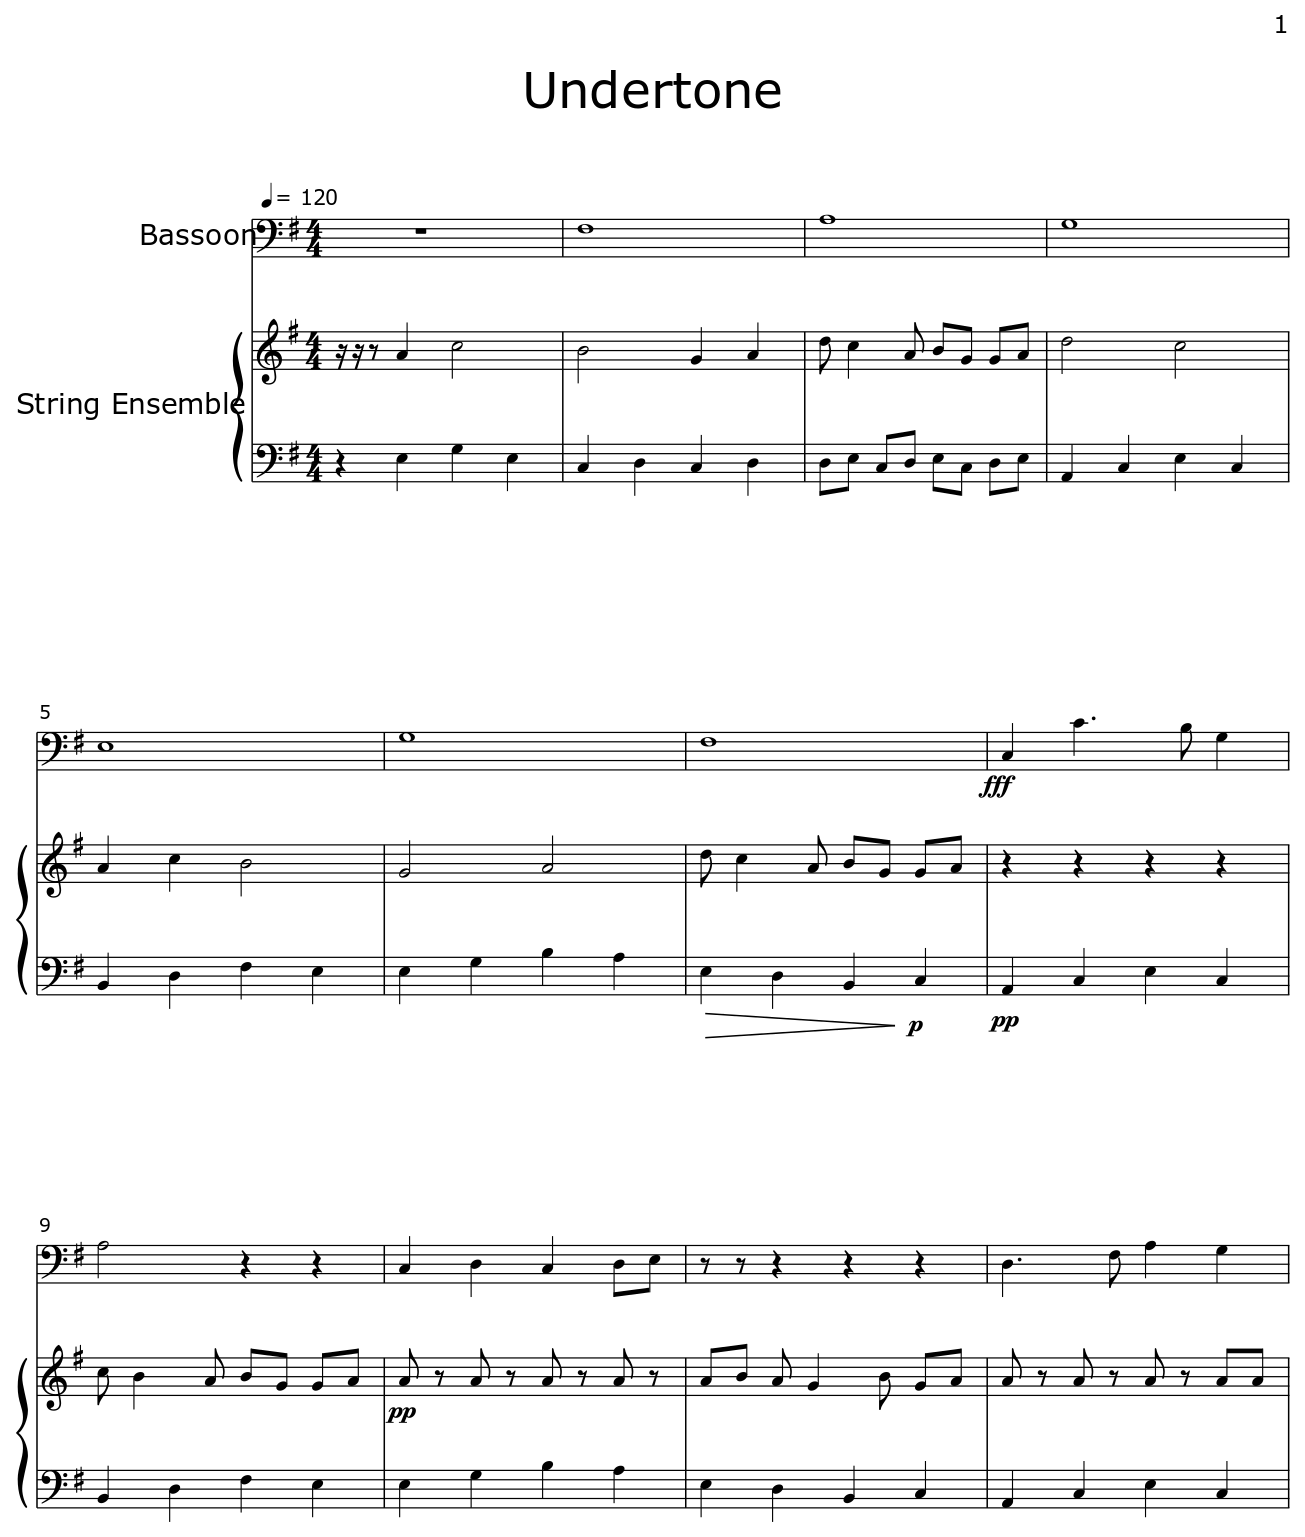 Undertone - Sheet music for Bassoon, String Ensemble